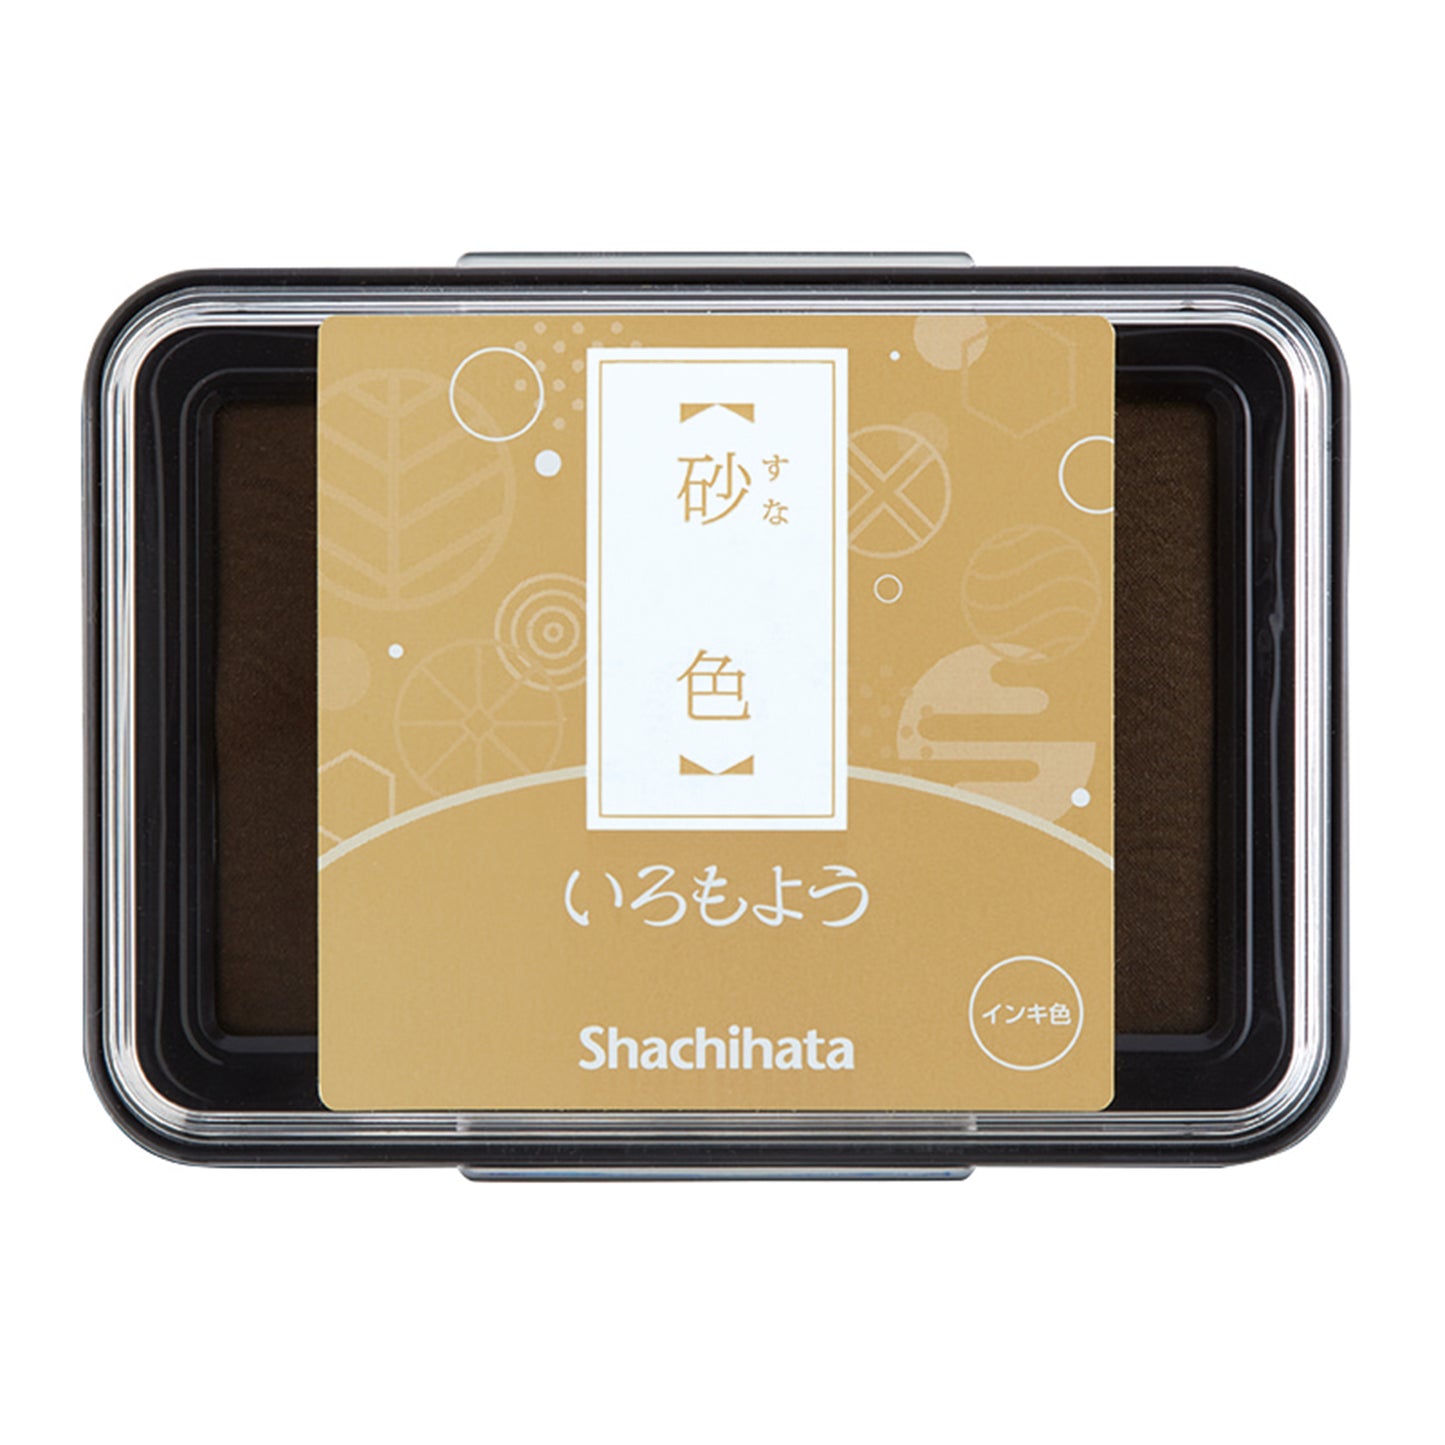 Shachihata Japanese Traditional Inkpads, Suna (Desert Sand), 1 PC